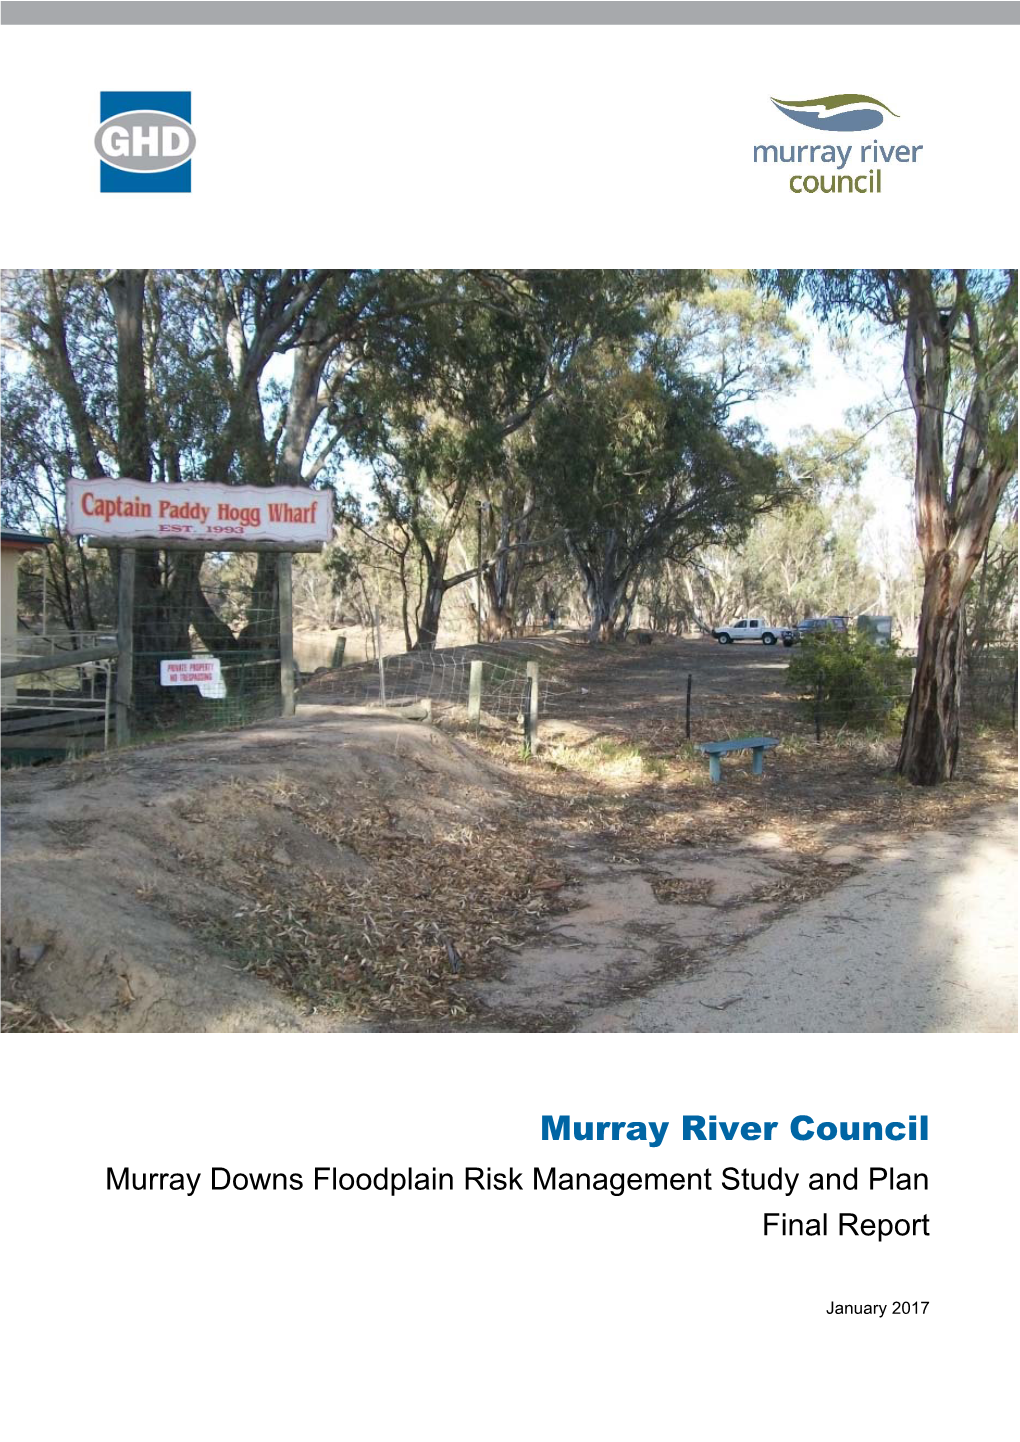 Murray Downs Floodplain Risk Management Study and Plan Final Report